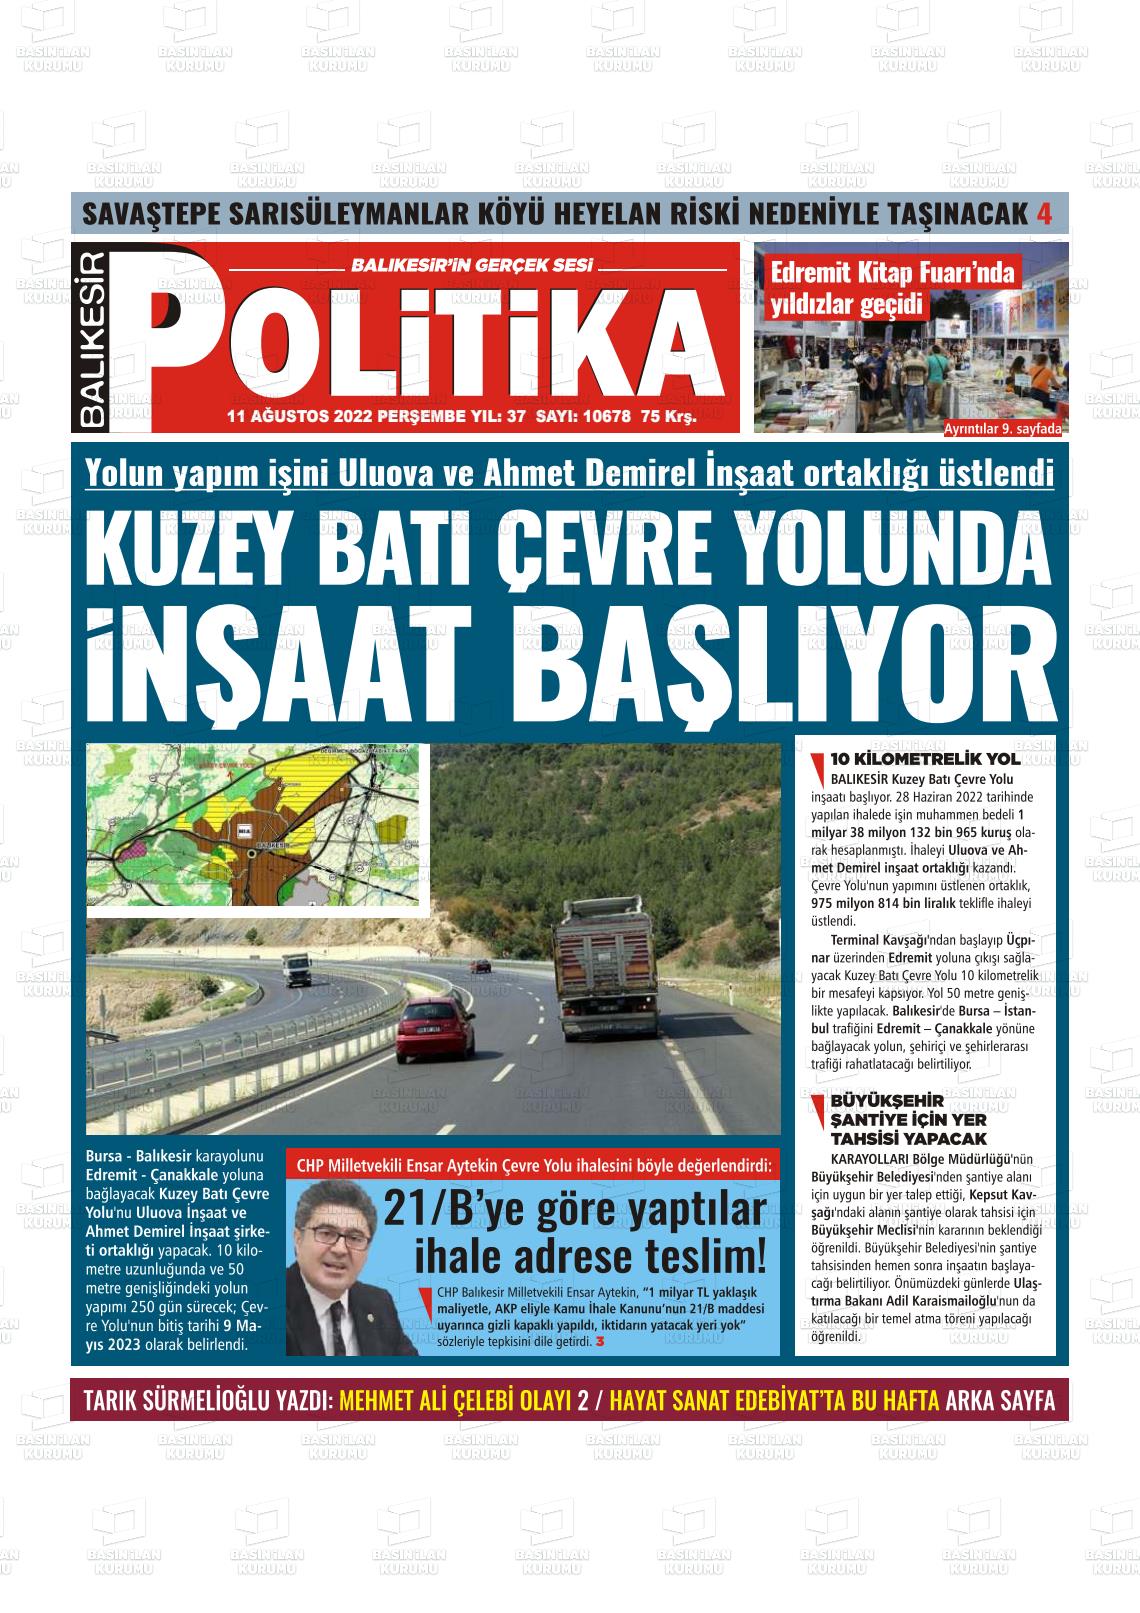 11 Ağustos 2022 Balıkesir Politika Gazete Manşeti